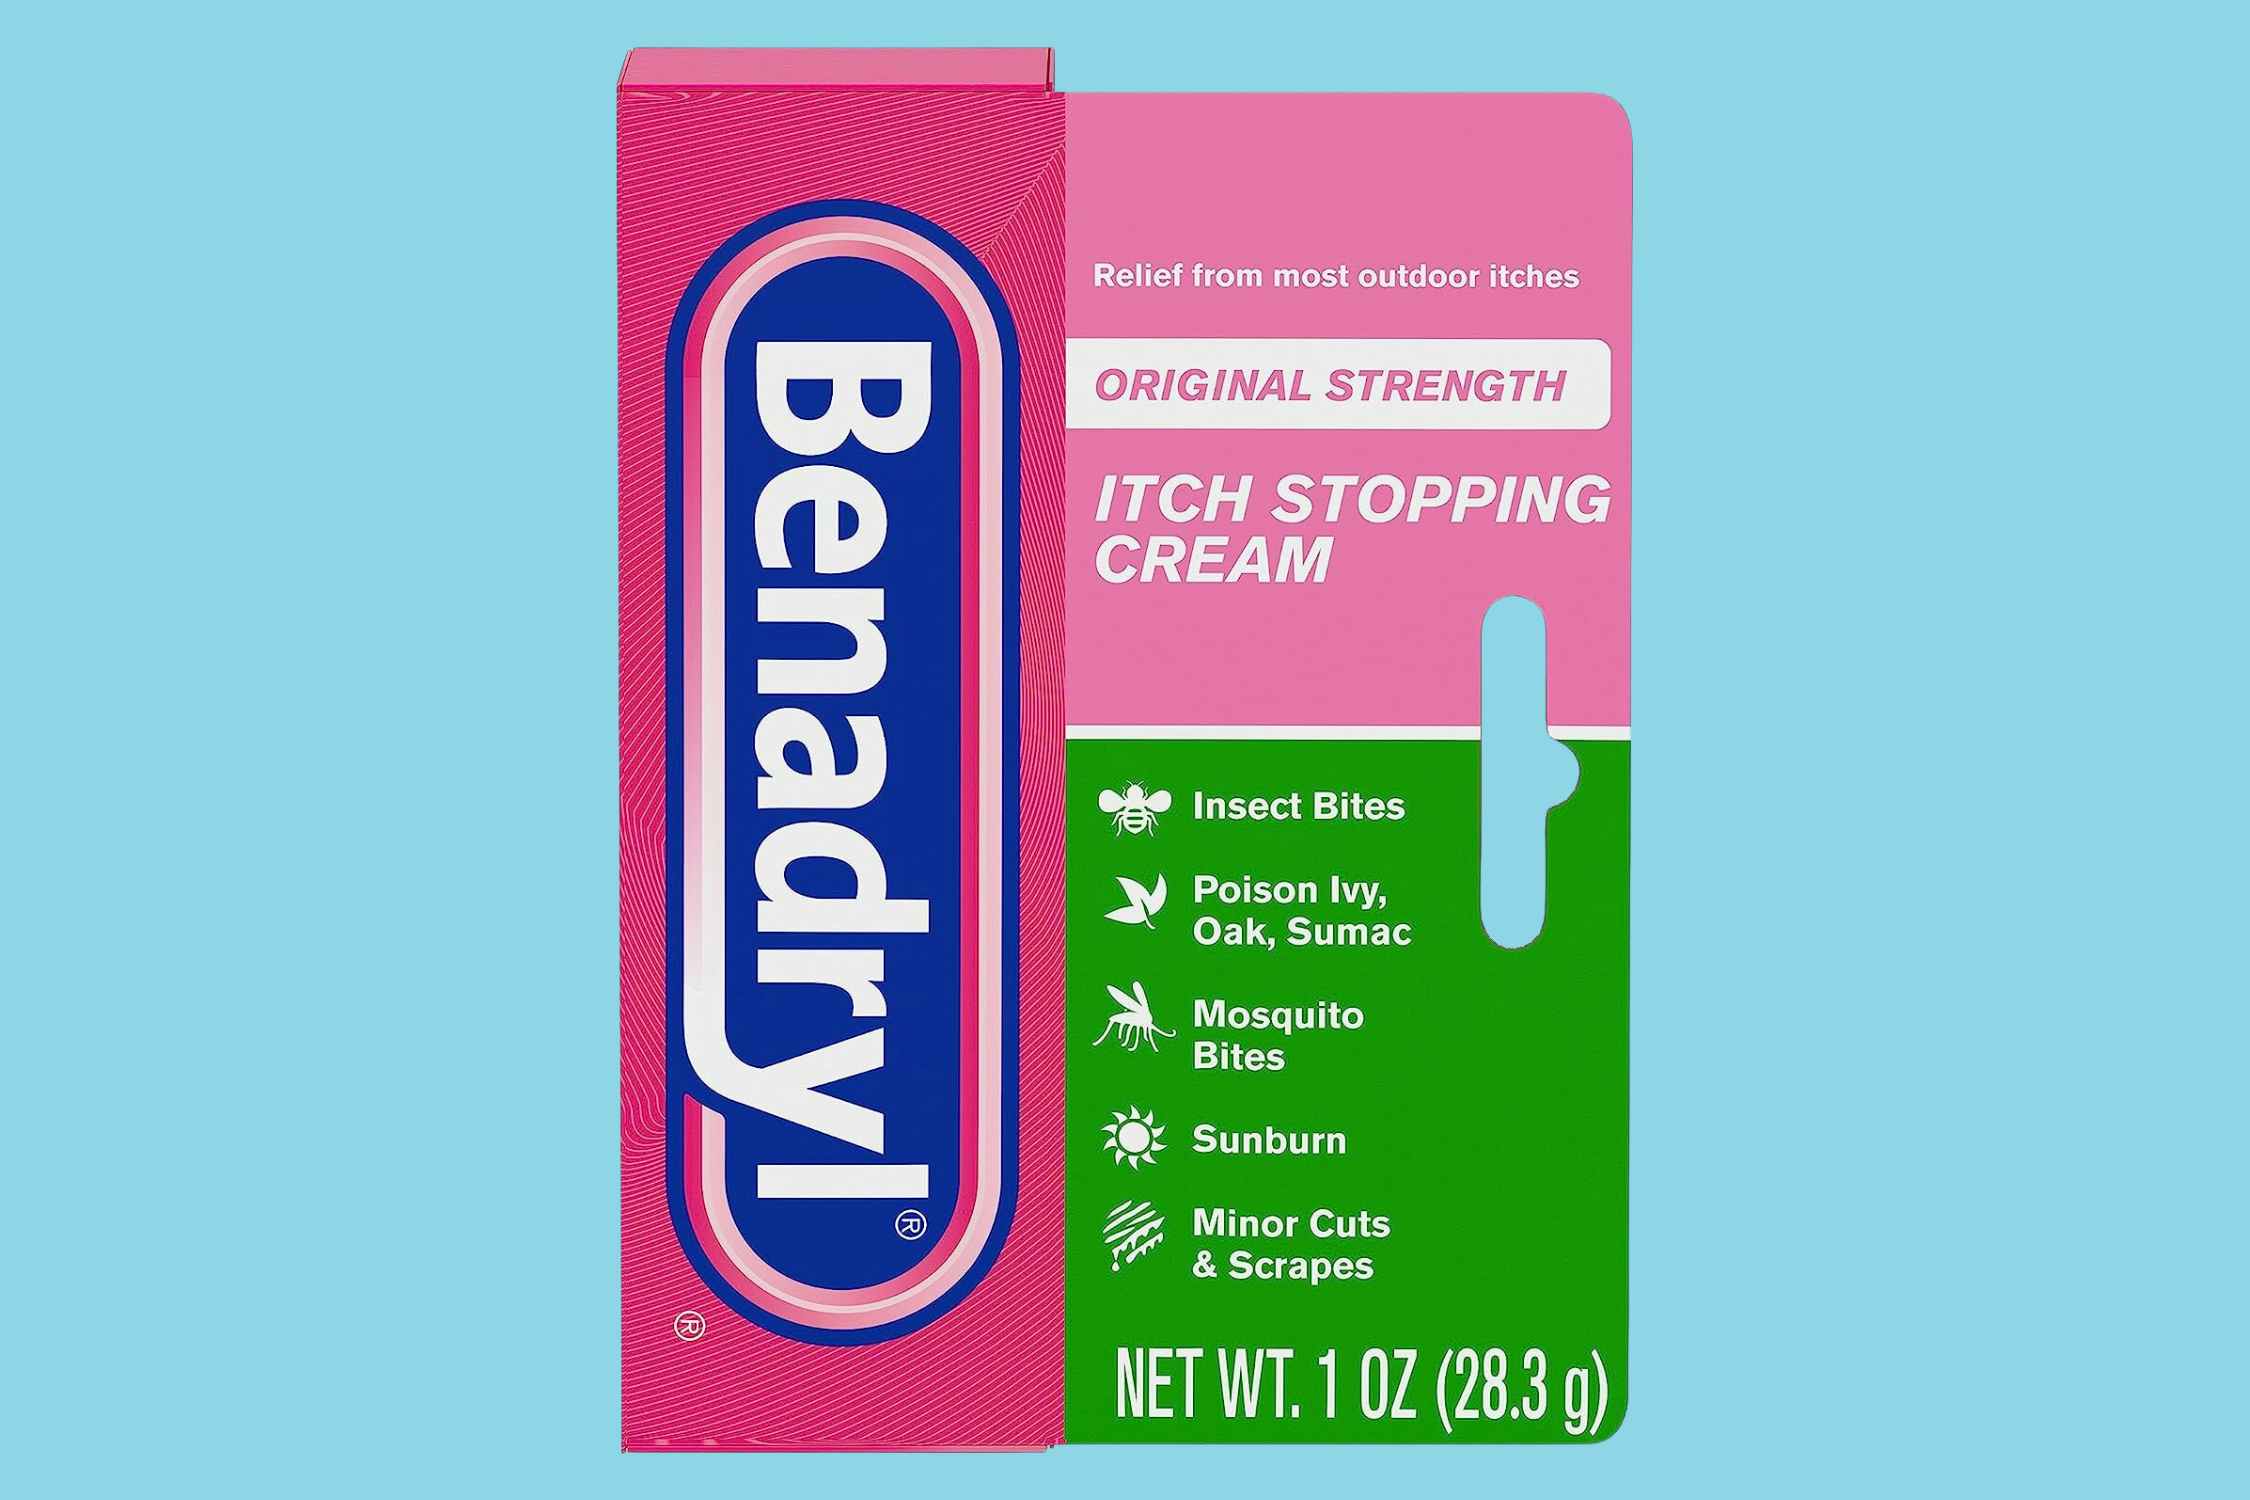 Benadryl Anti-Itch Cream, as Low as $1.57 on Amazon